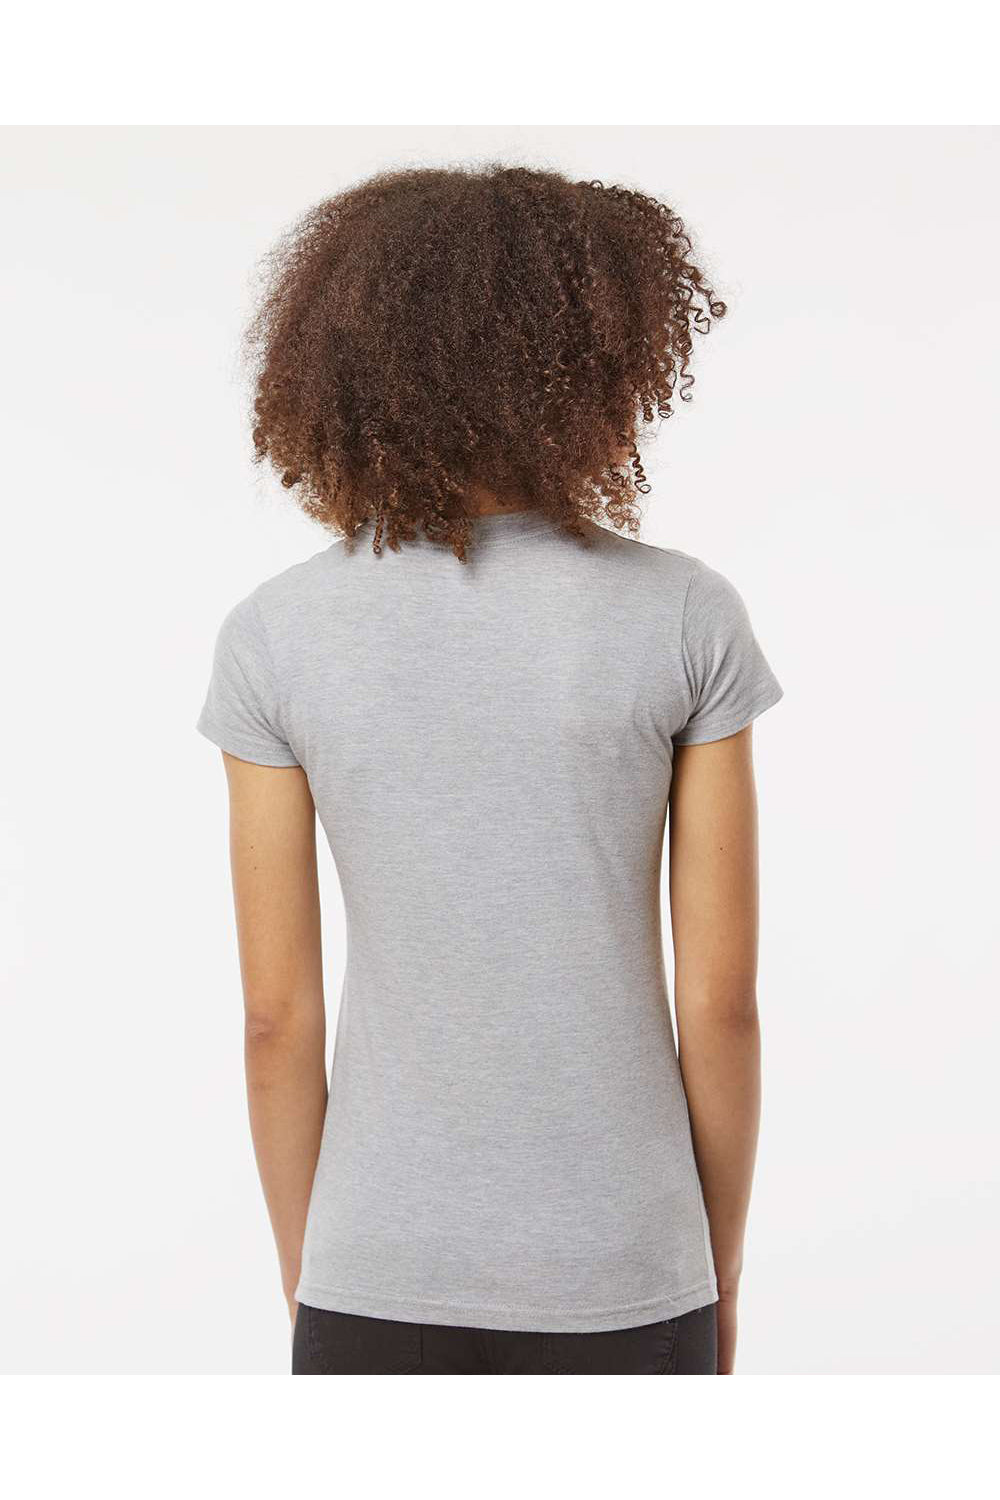 Tultex 213 Womens Fine Jersey Slim Fit Short Sleeve Crewneck T-Shirt Heather Grey Model Back